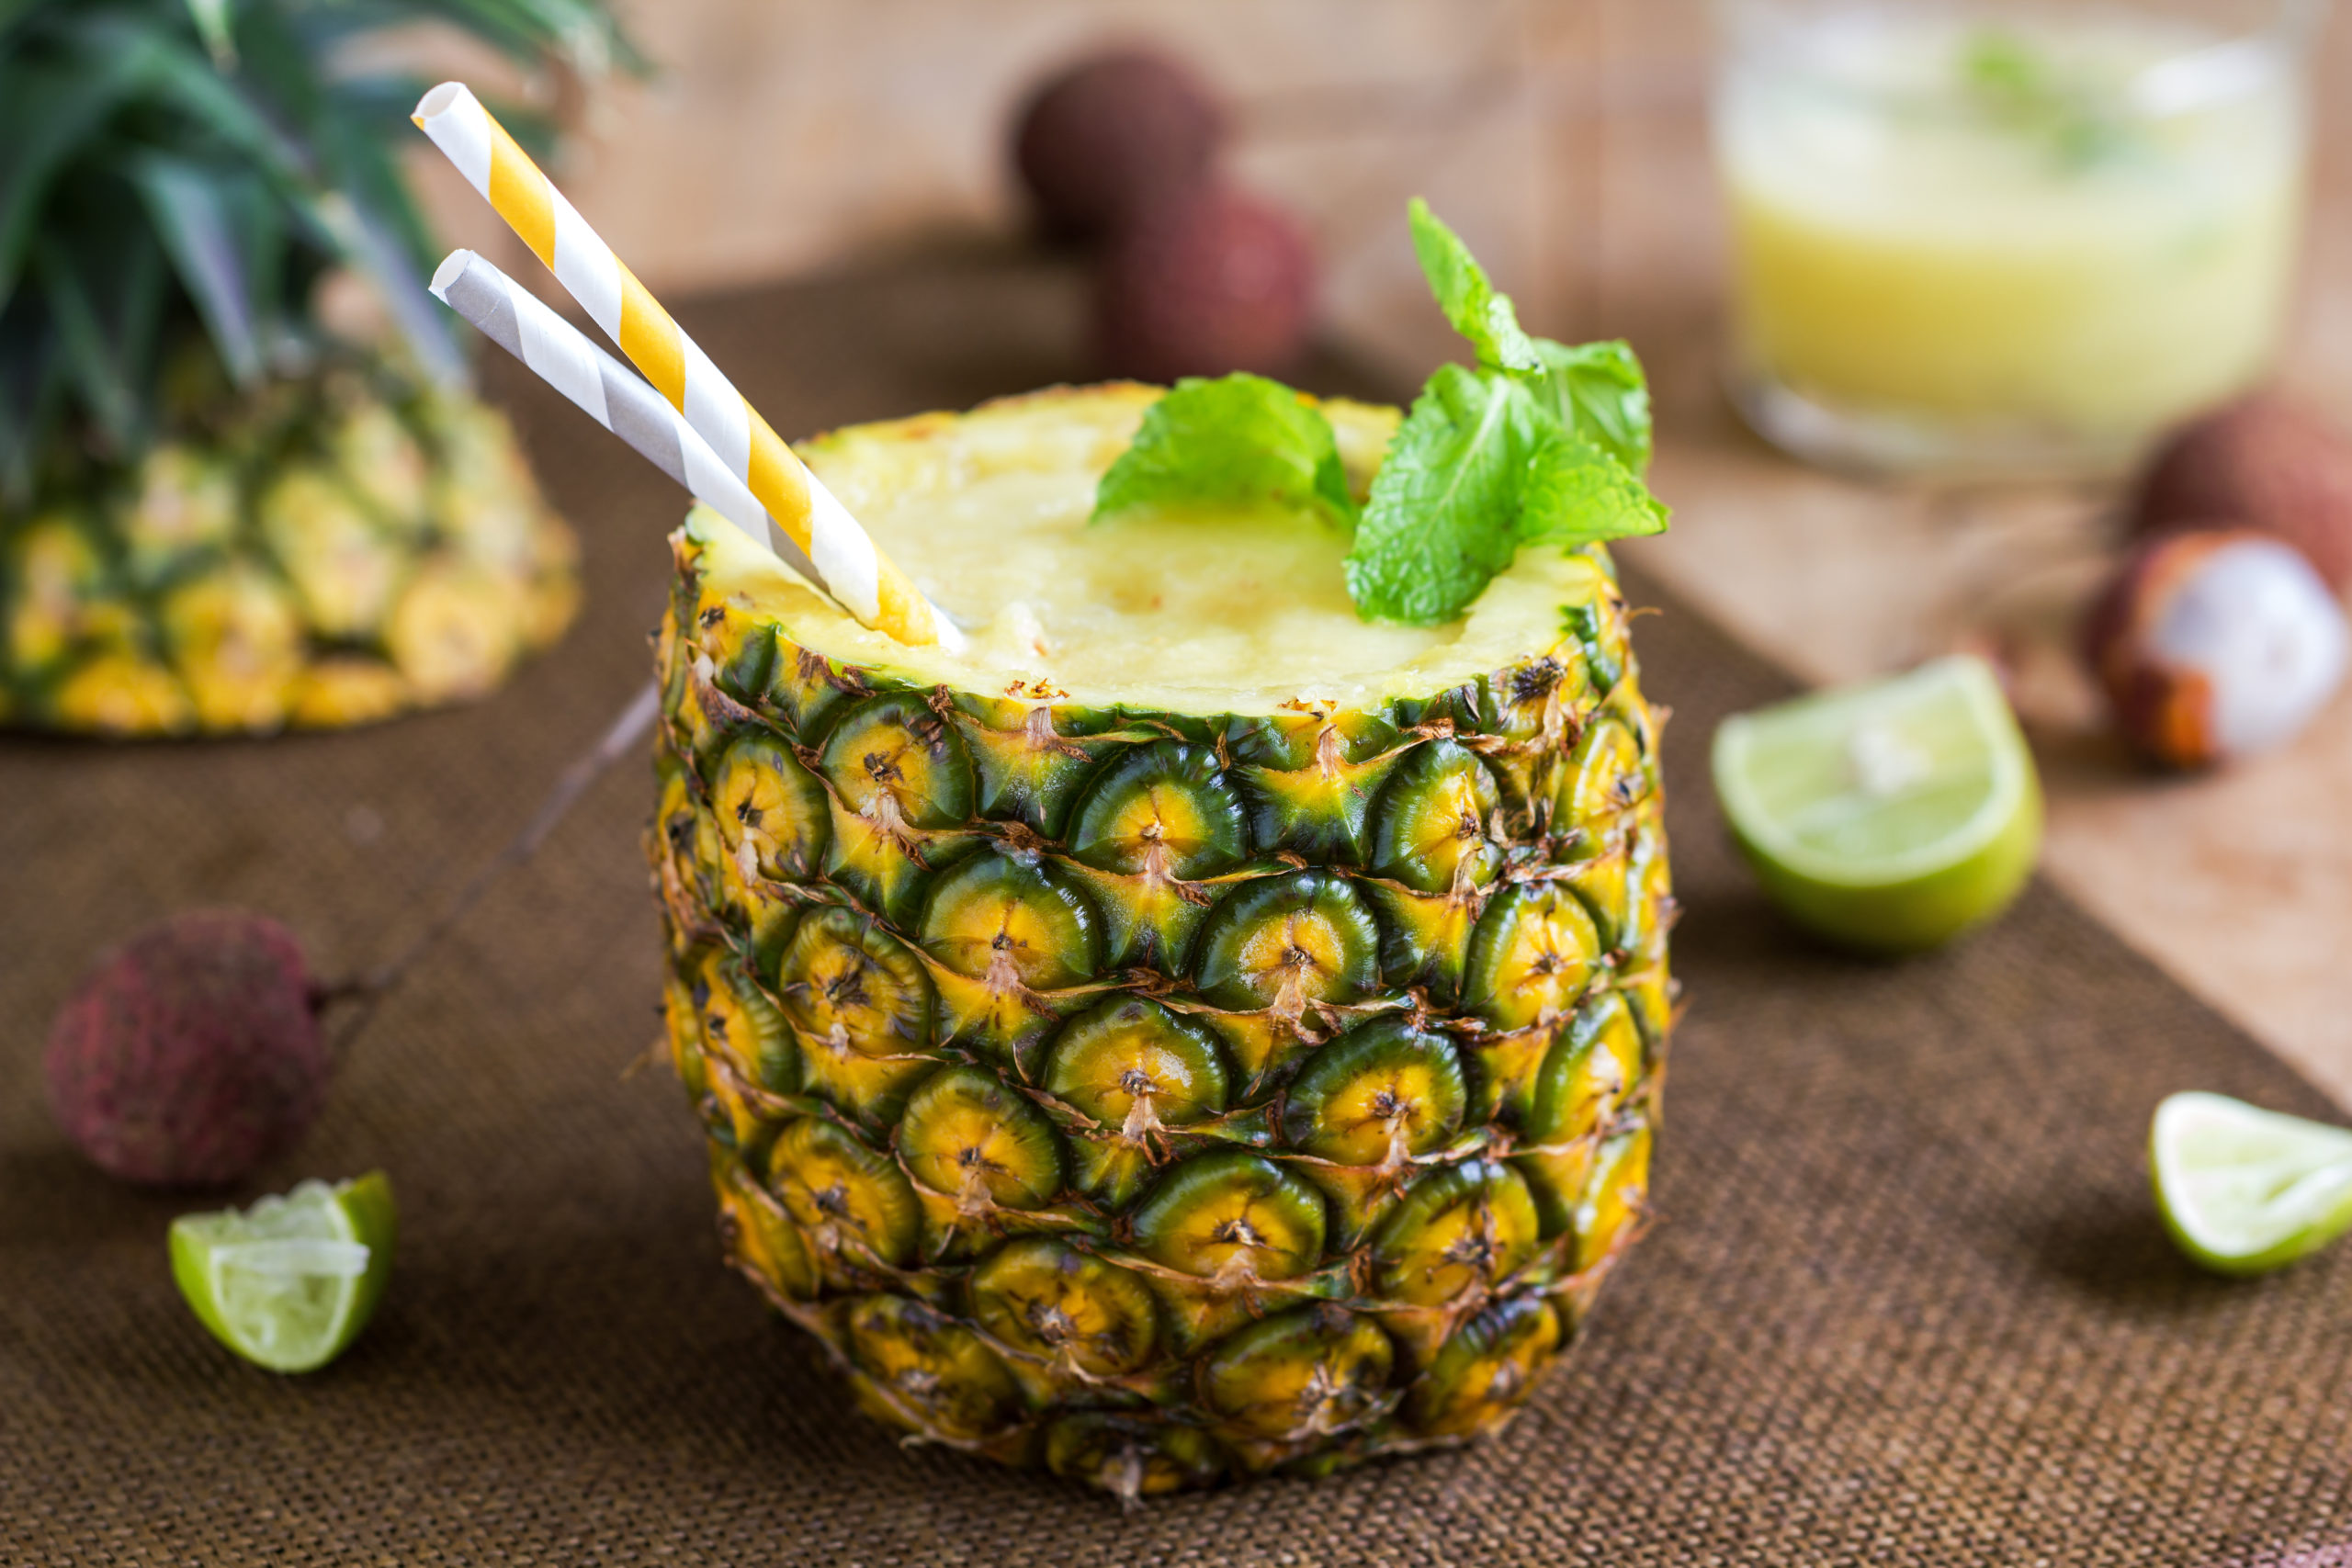 Pineapple smoothie fresh